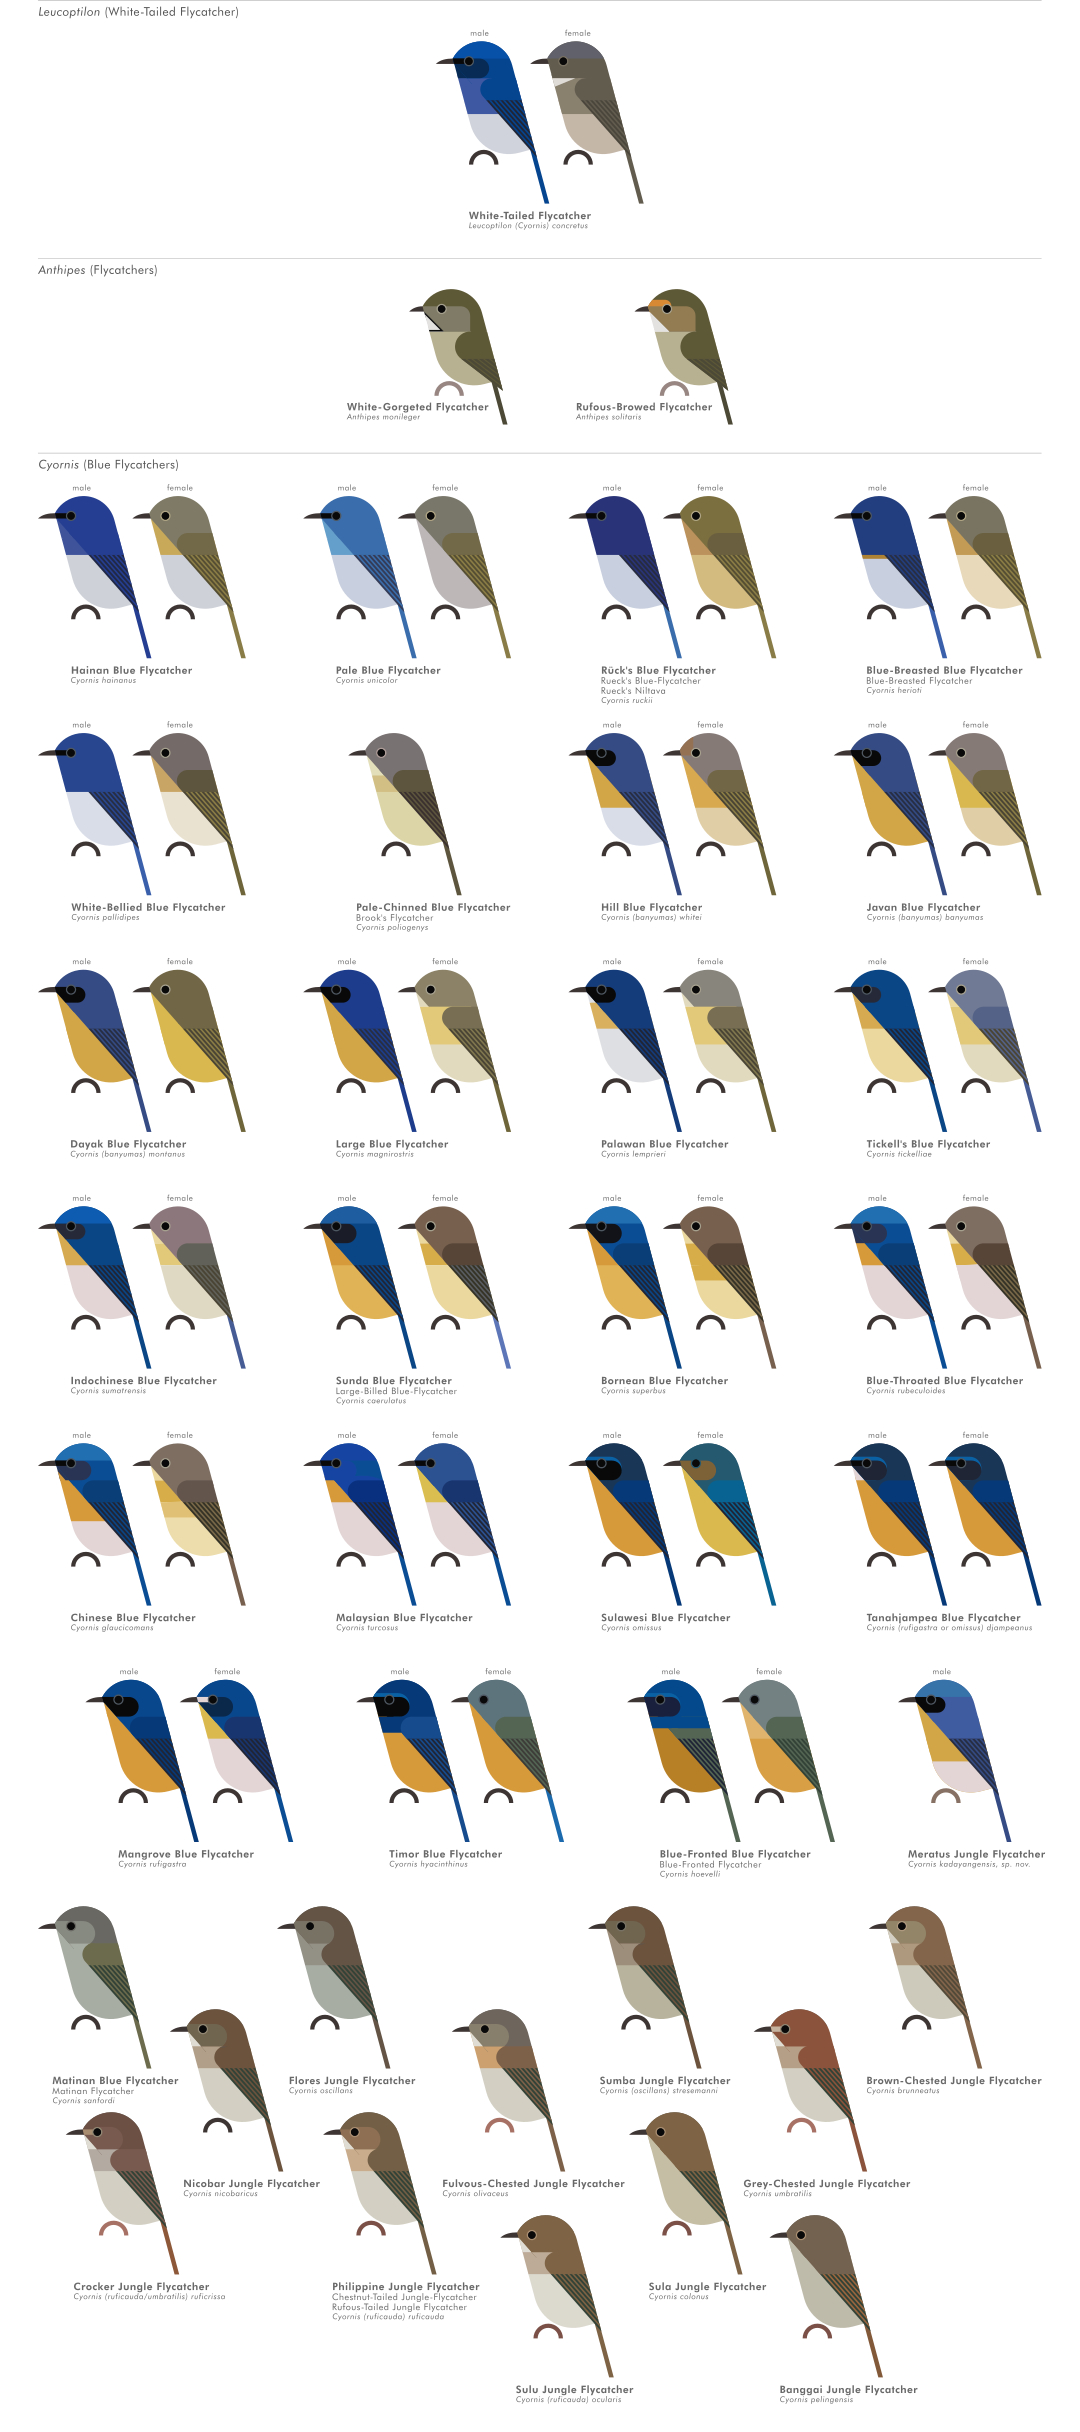 scott partridge - AVE - avian vector encyclopedia - old world flycatchers - bird vector art